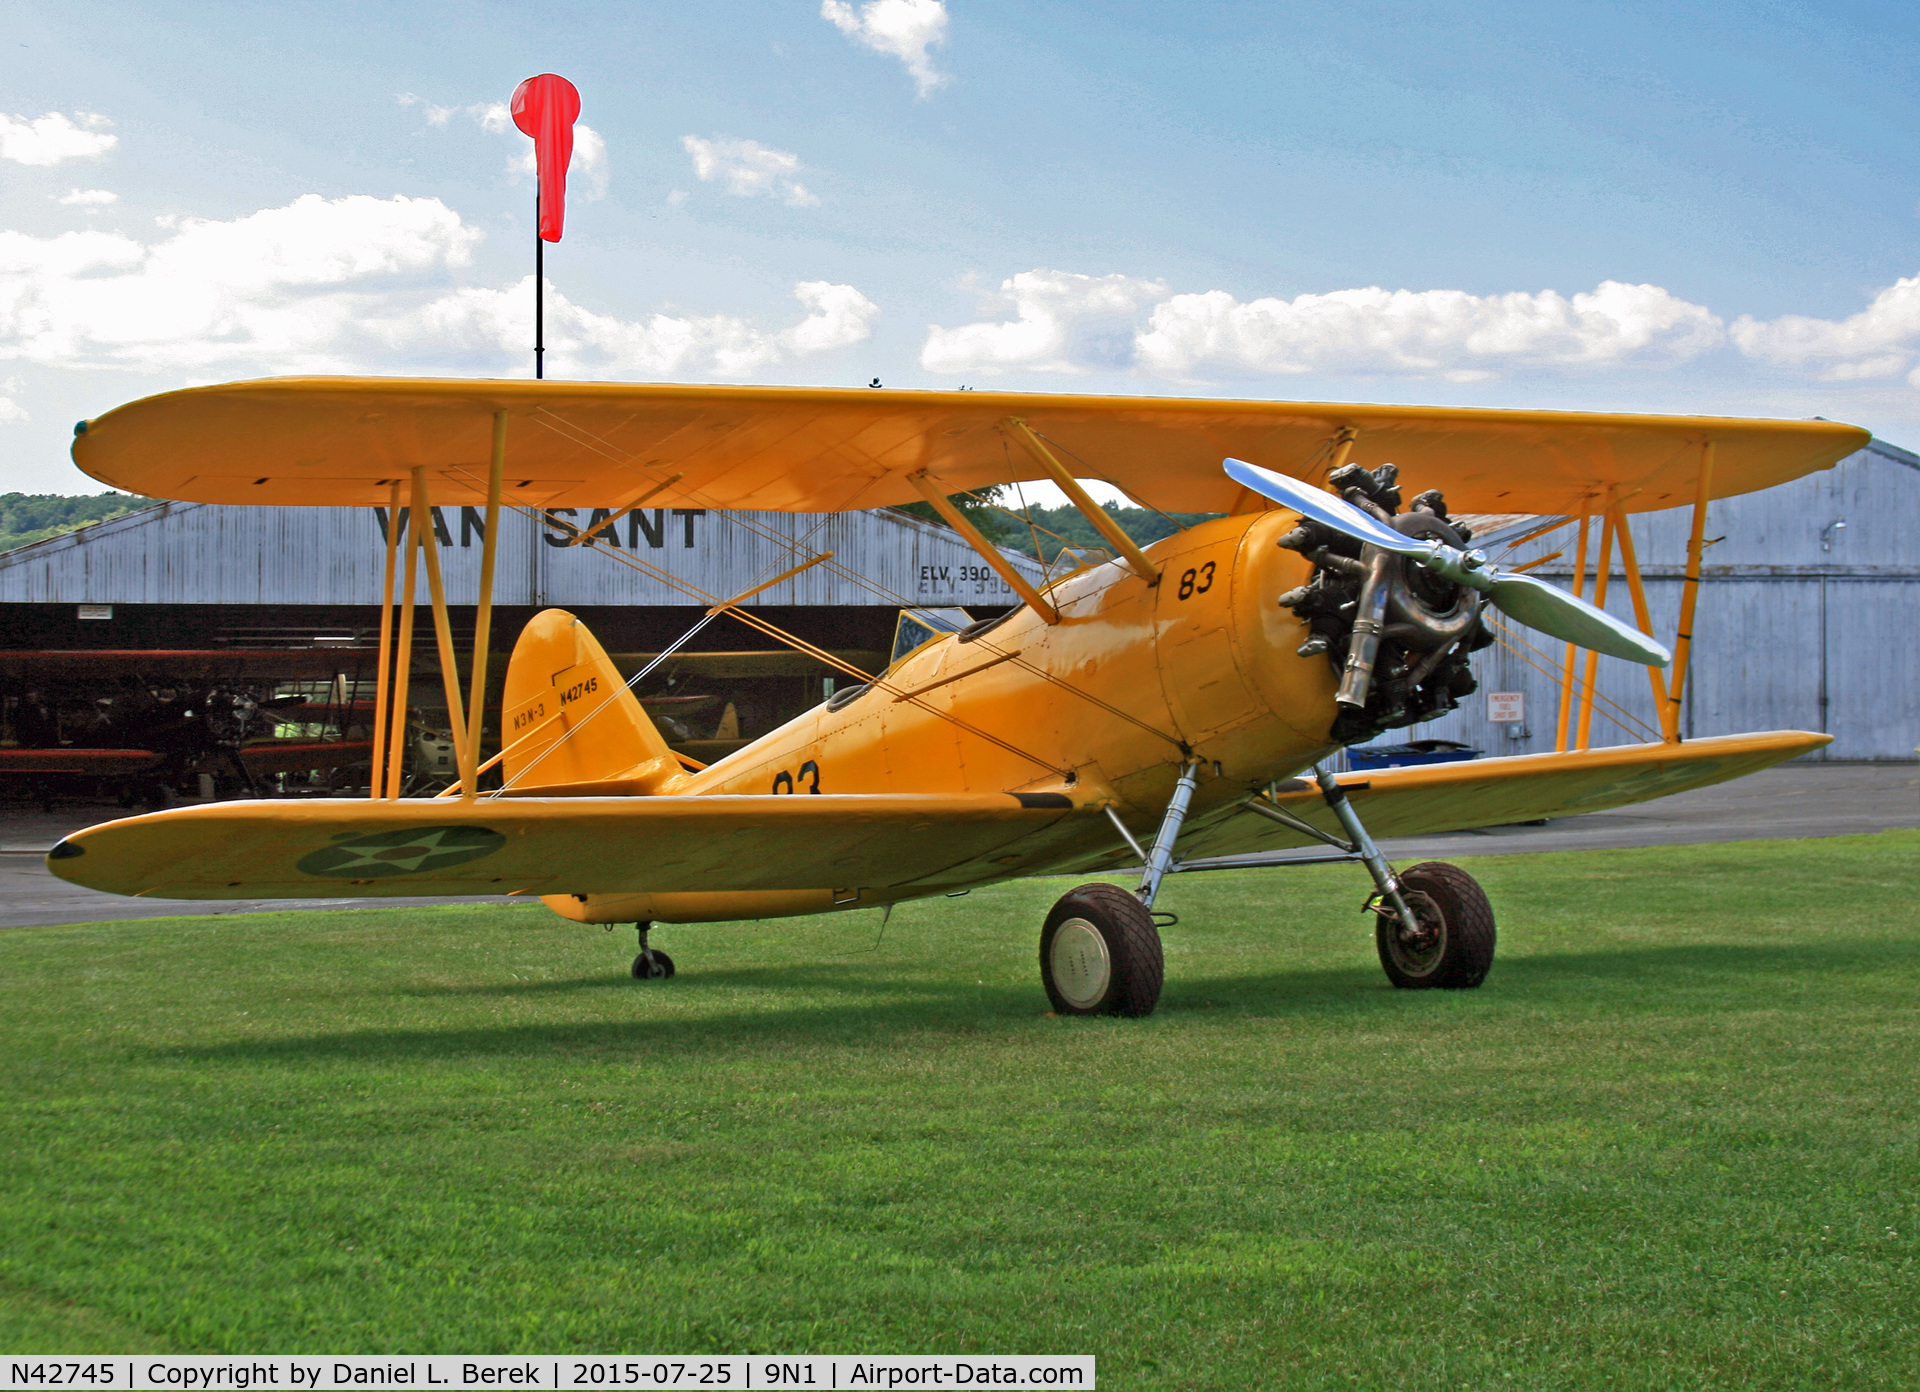 N42745, 1941 Naval Aircraft Factory N3N-3 C/N 4383, This beautiful Yellow Peril trainer was at historic Van Sant Airport, Erwinna, PA.